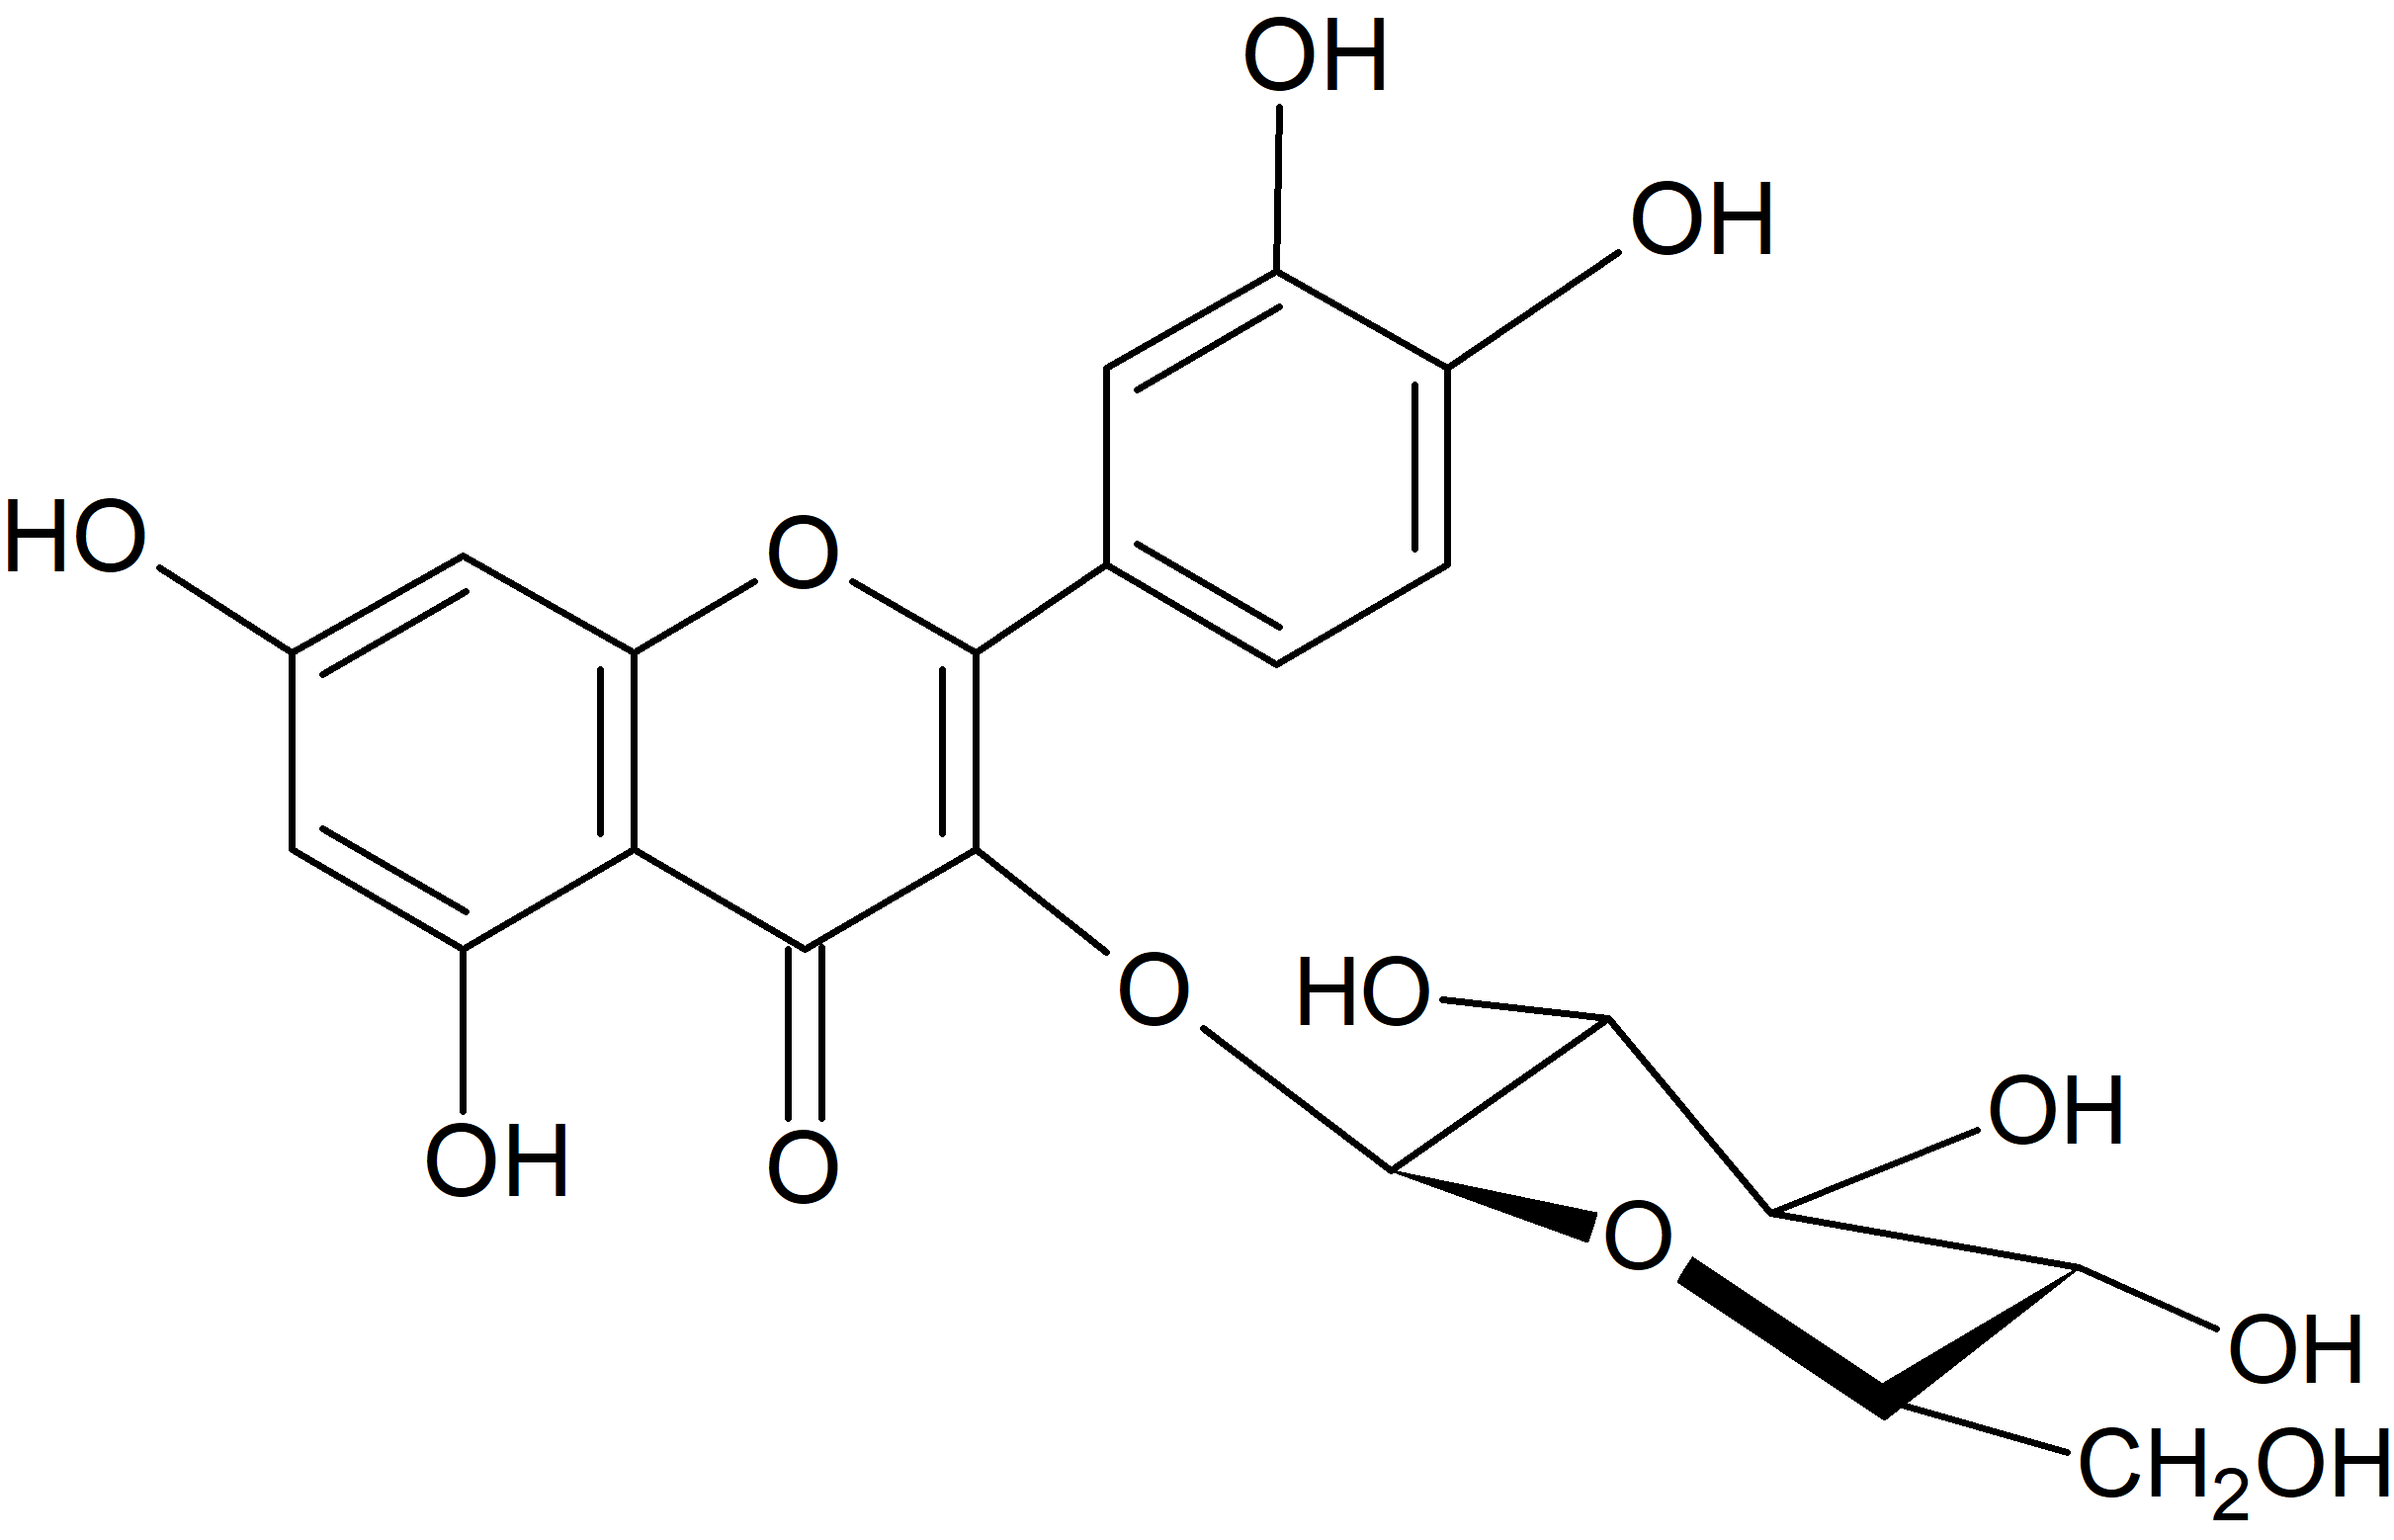 Quercetin 3-O-glucoside